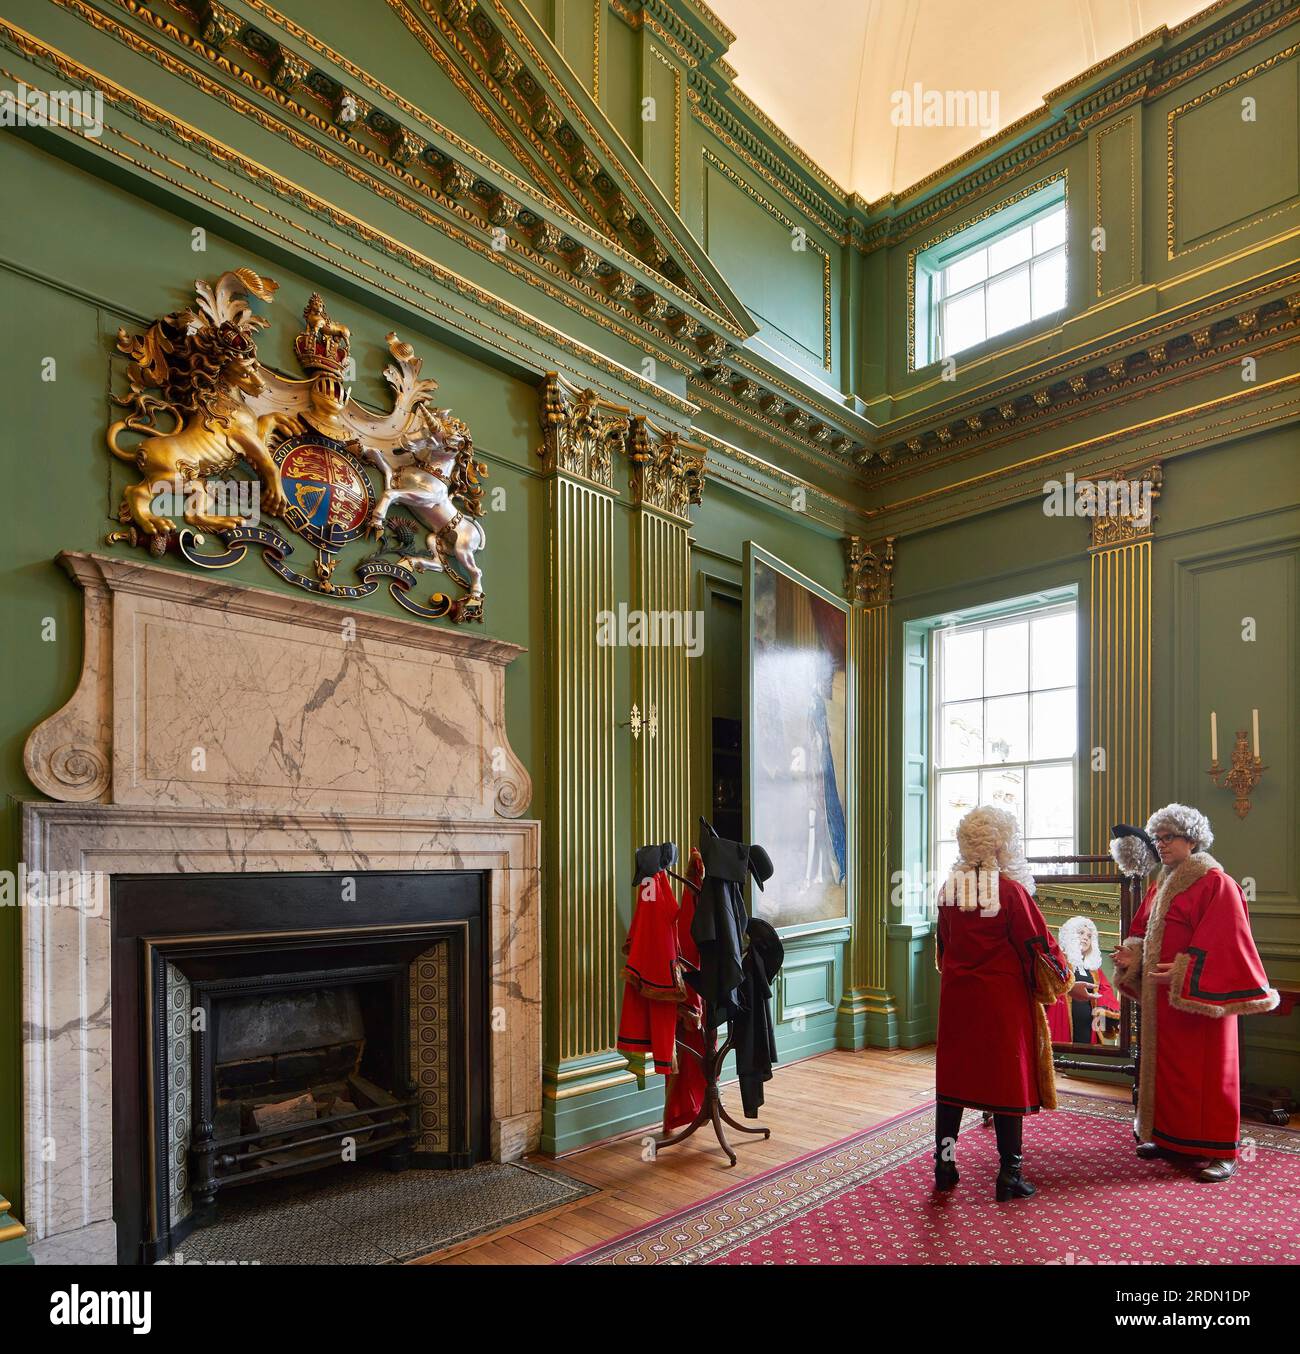 Re-enactment of historic scene in stateroom. York Mansion House, York, United Kingdom. Architect: De Matos Ryan, 2018. Stock Photo